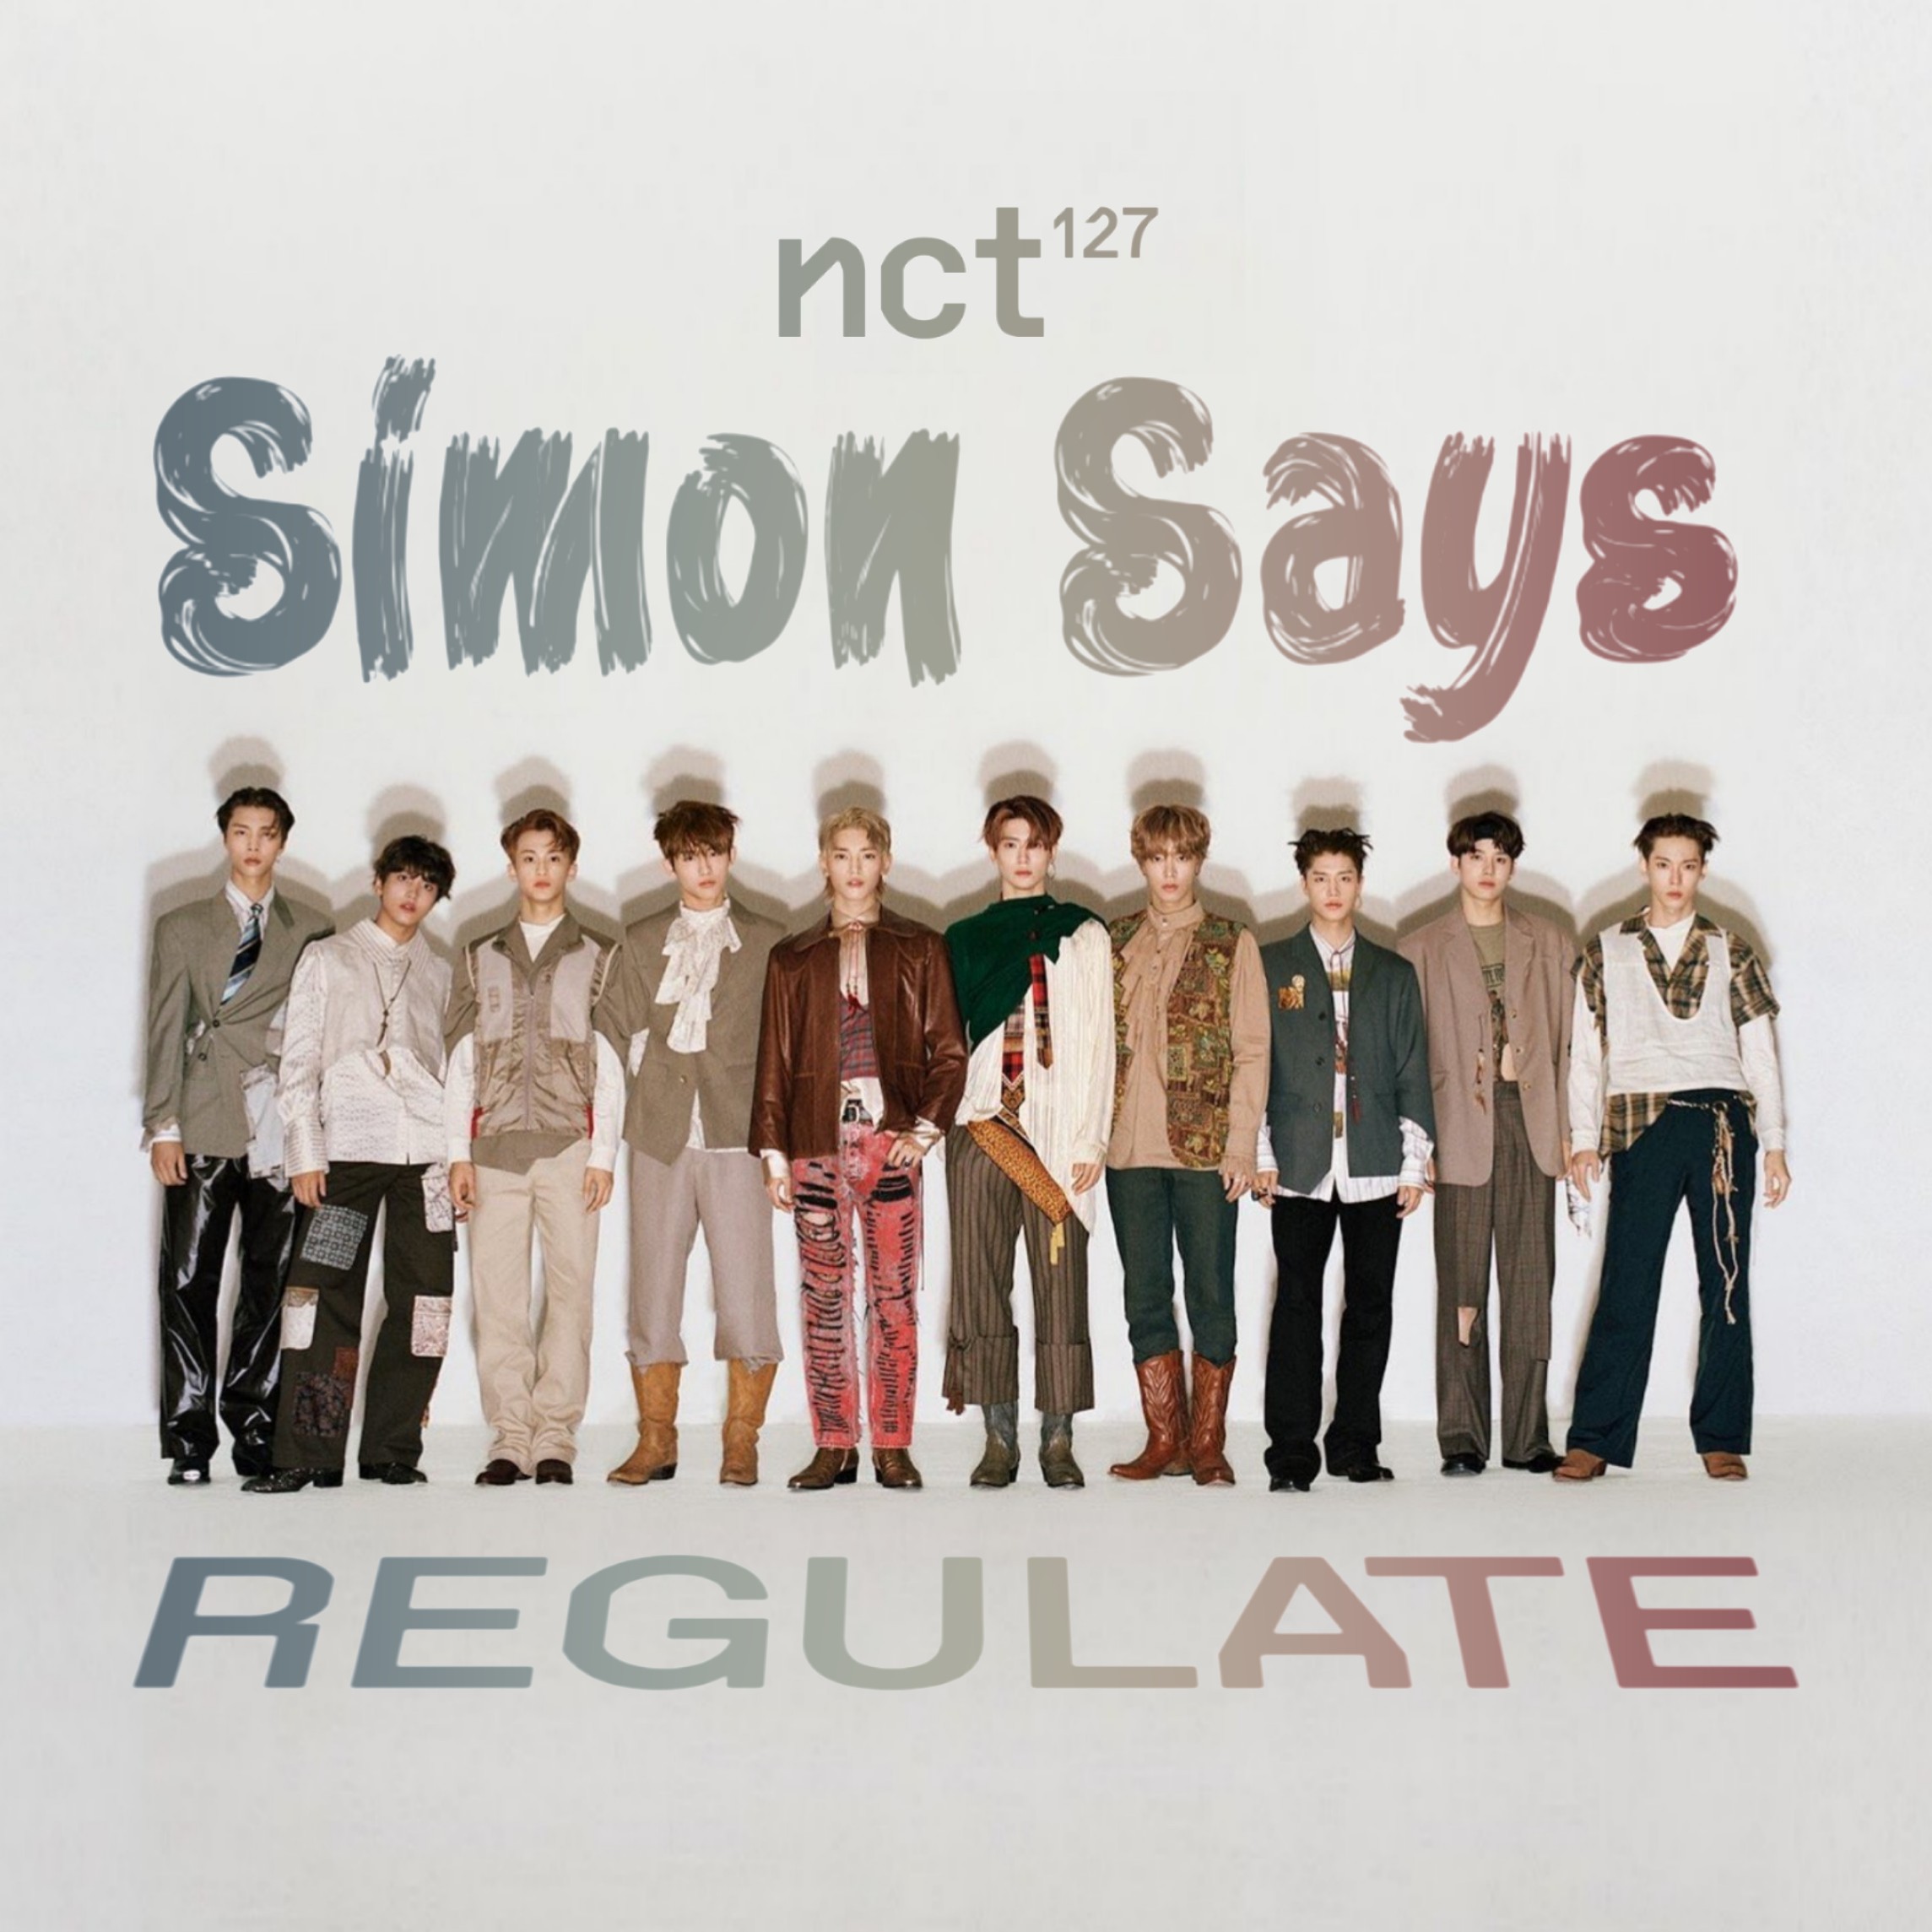 NCT 127 SIMON SAYS / REGULATE album cover by LEAlbum on DeviantArt